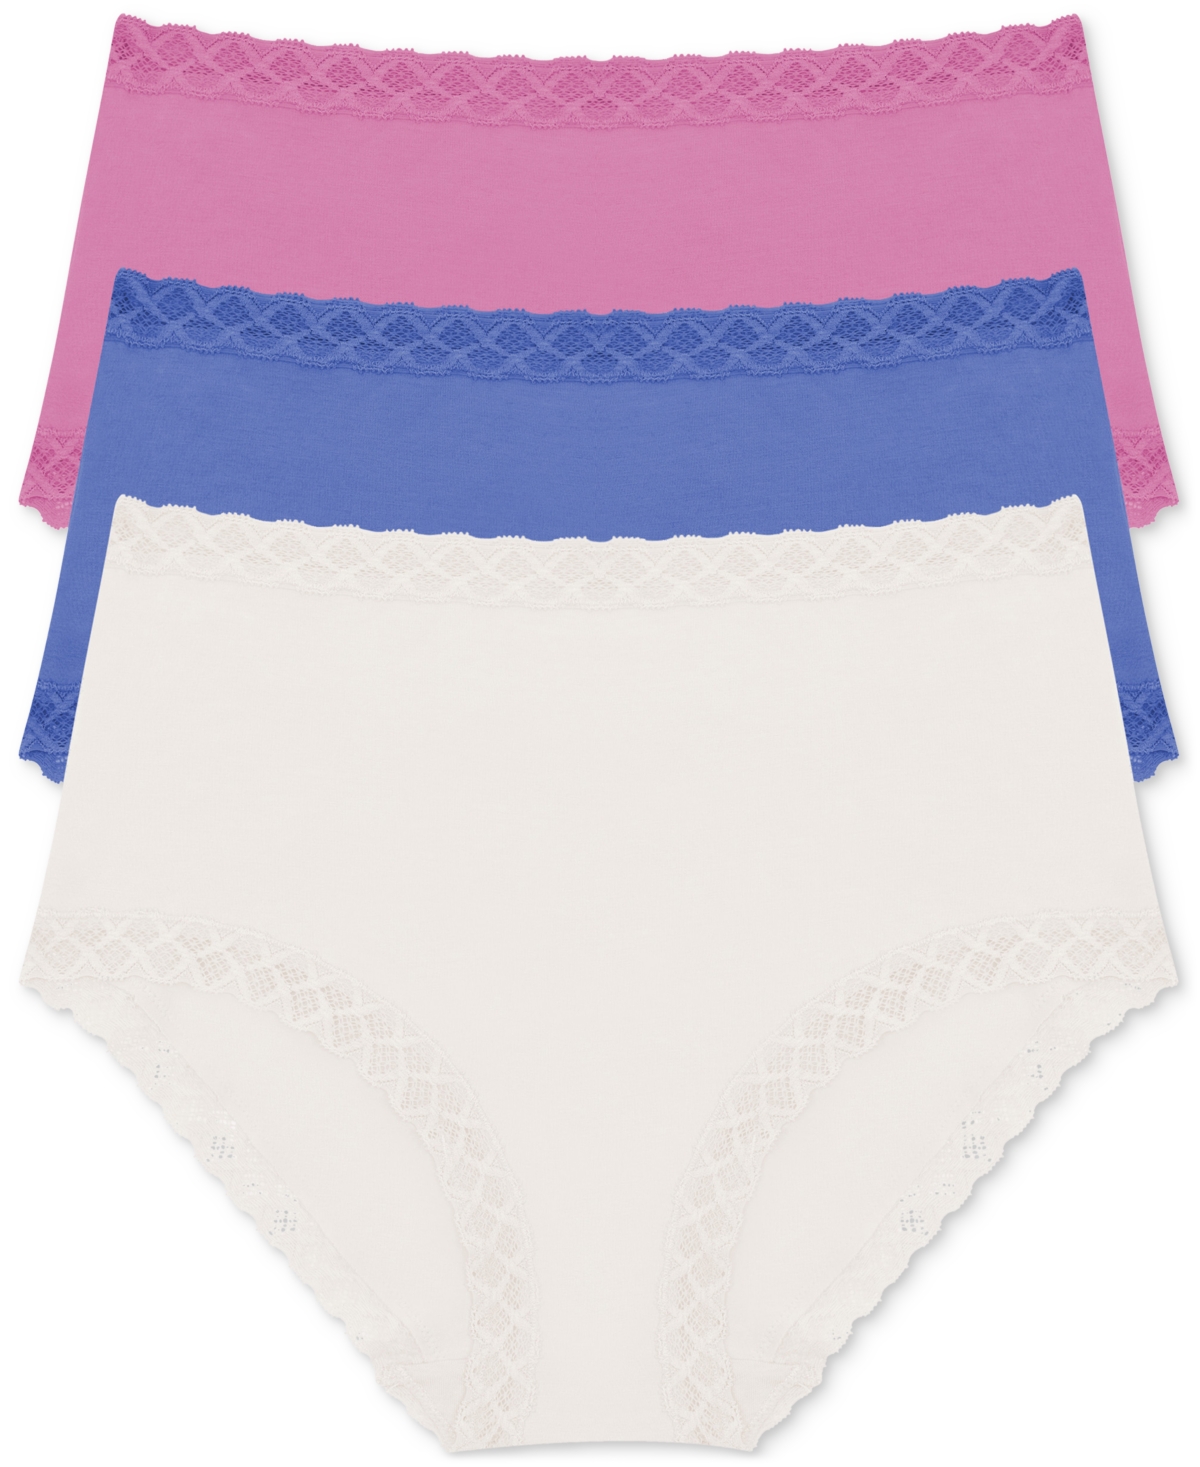 Natori Bliss Lace Trim High Rise Brief Underwear 3-pack 755058mp In Ivory Pack